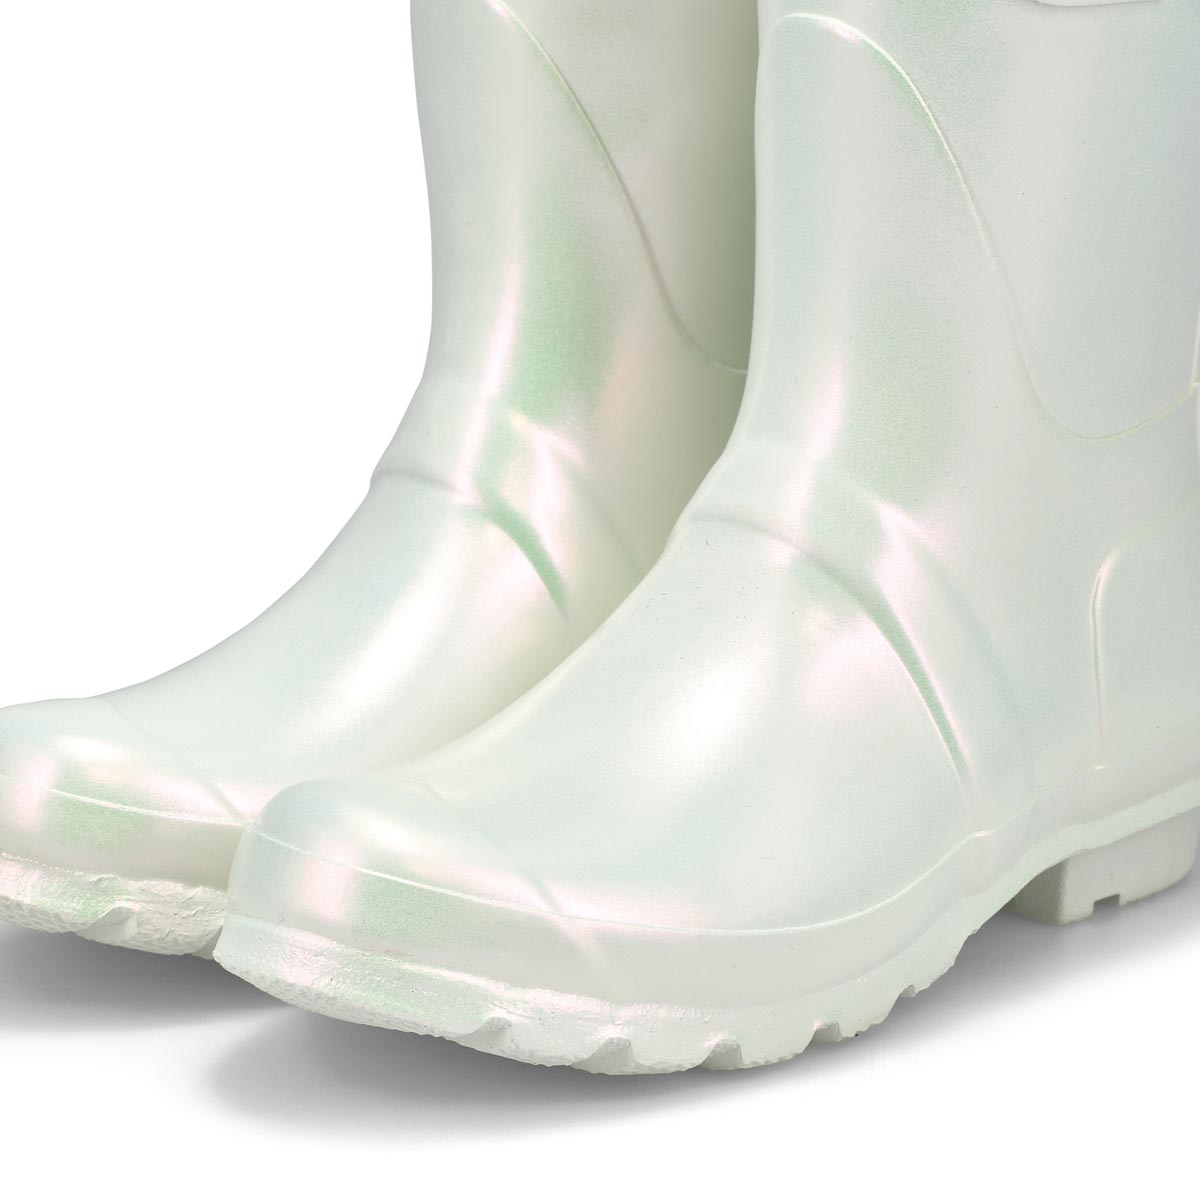 Women's Original Short Nebula Rain Boot - Silver